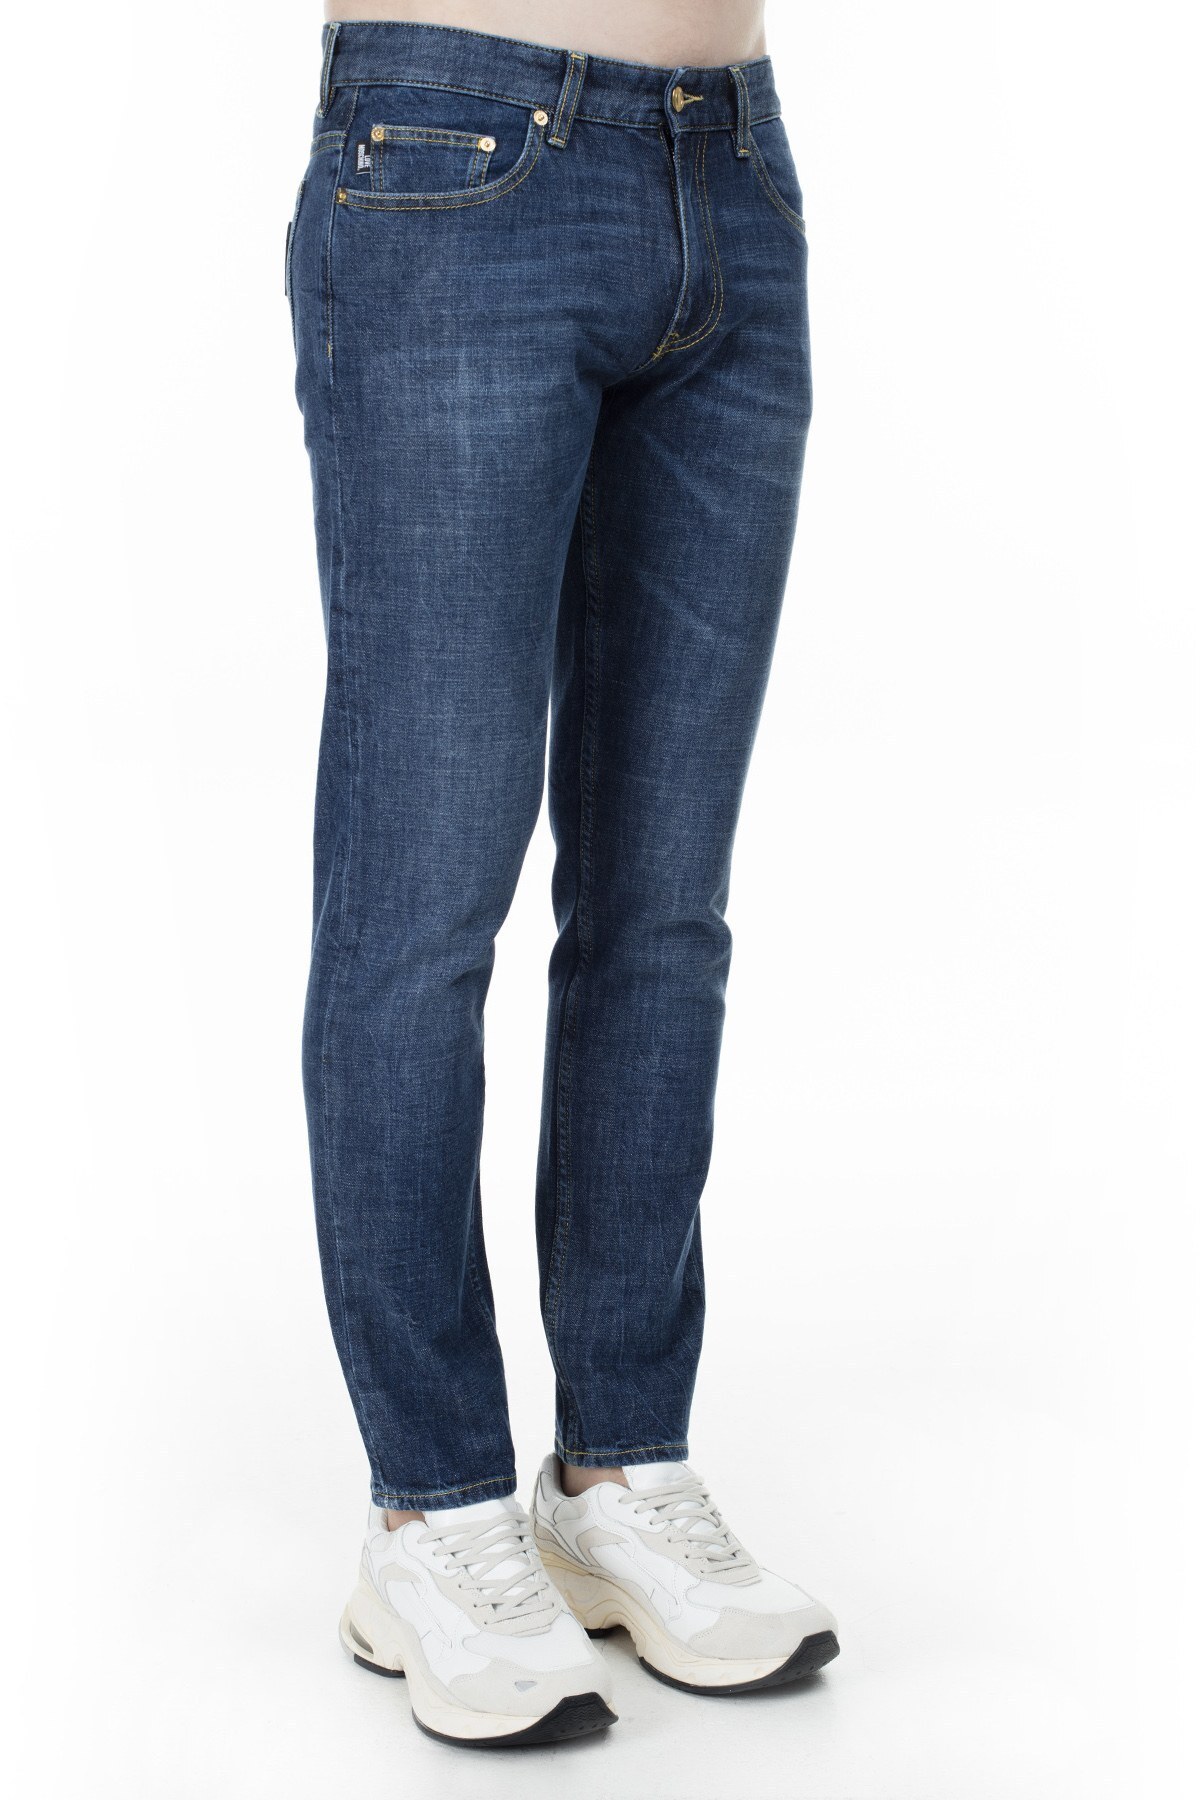 Love Moschino Jeans Erkek Kot Pantolon S MQ42181S3212 388W İNDİGO